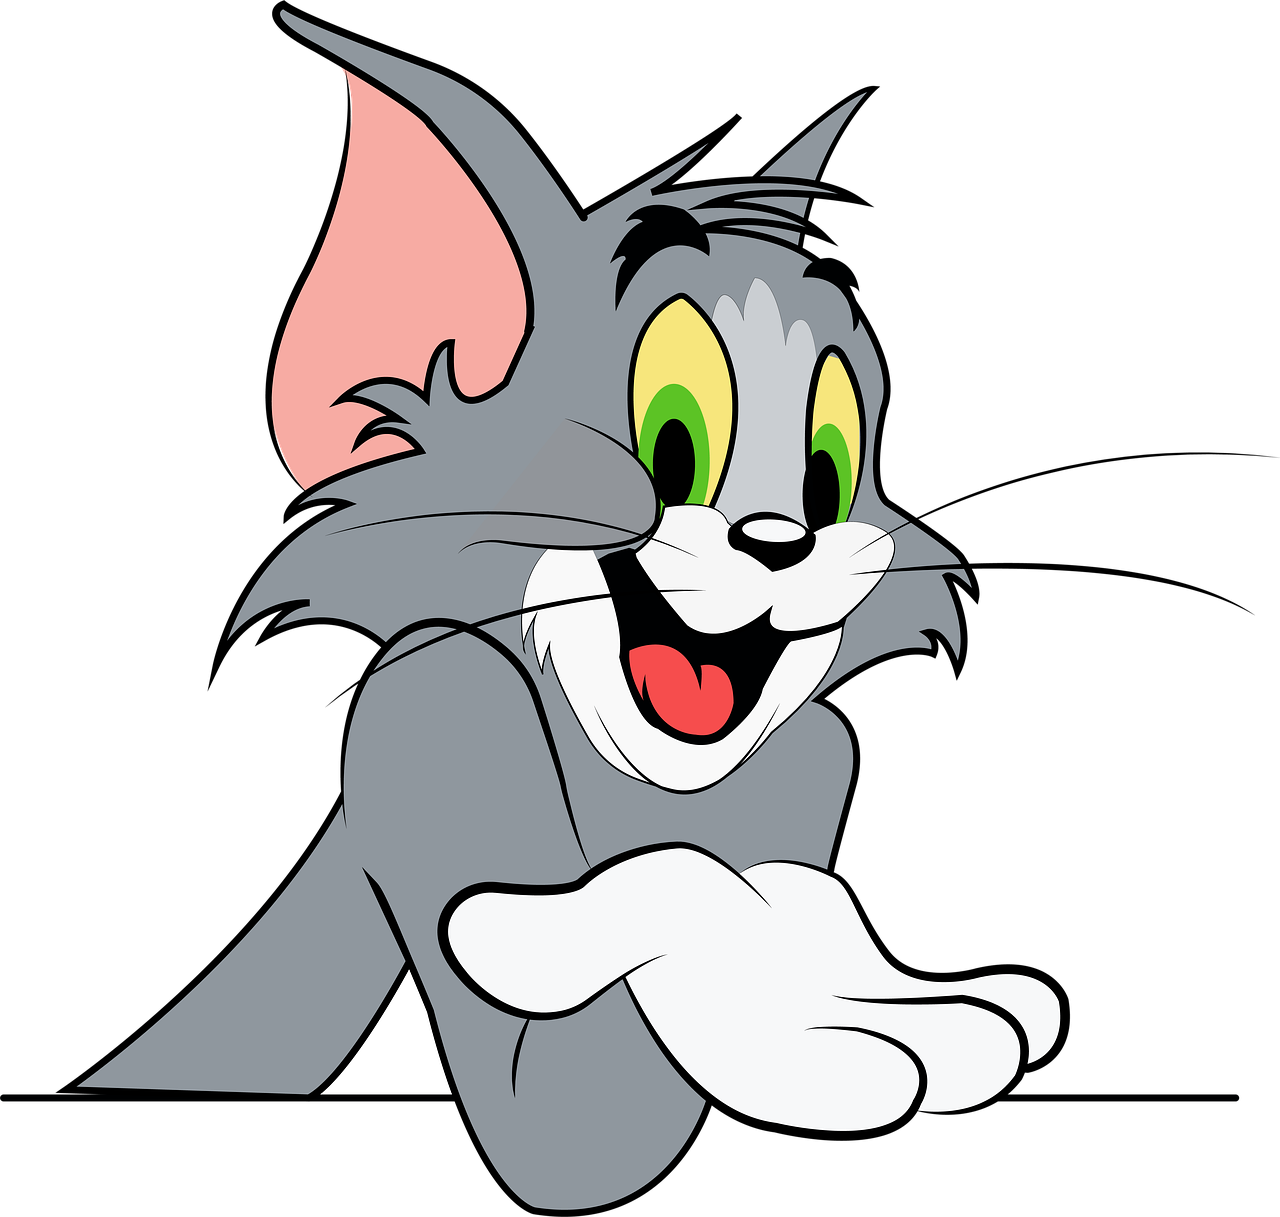 Том из тома и джерри. Tom and Jerry. Кот том и Джерри. Tom from Tom and Jerry.